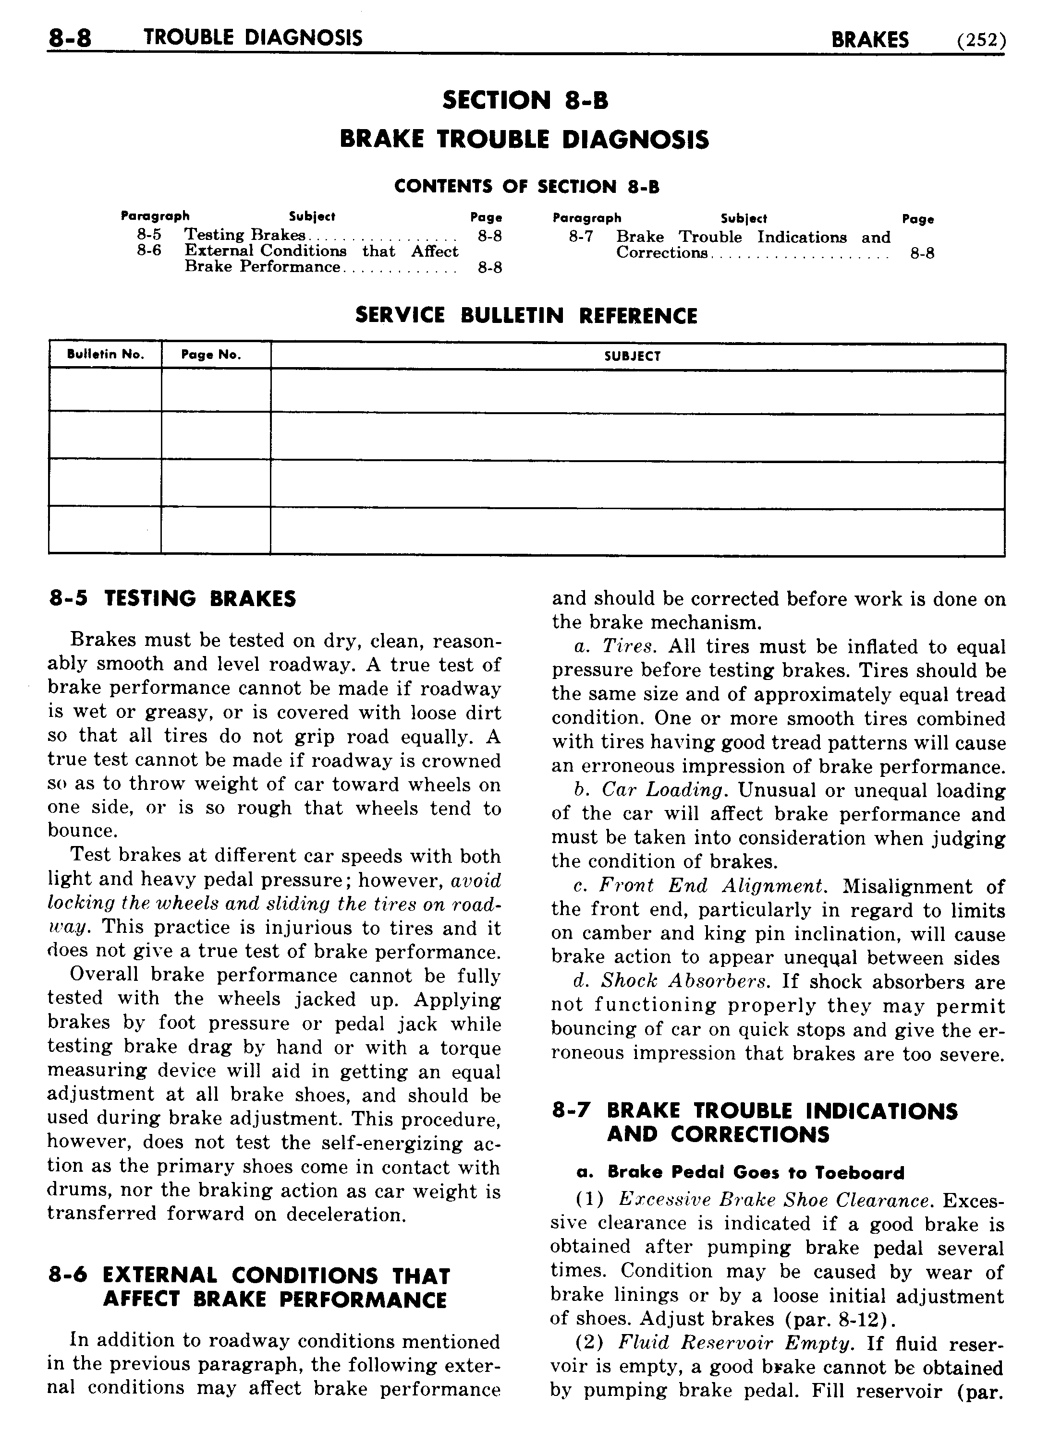 n_09 1948 Buick Shop Manual - Brakes-008-008.jpg